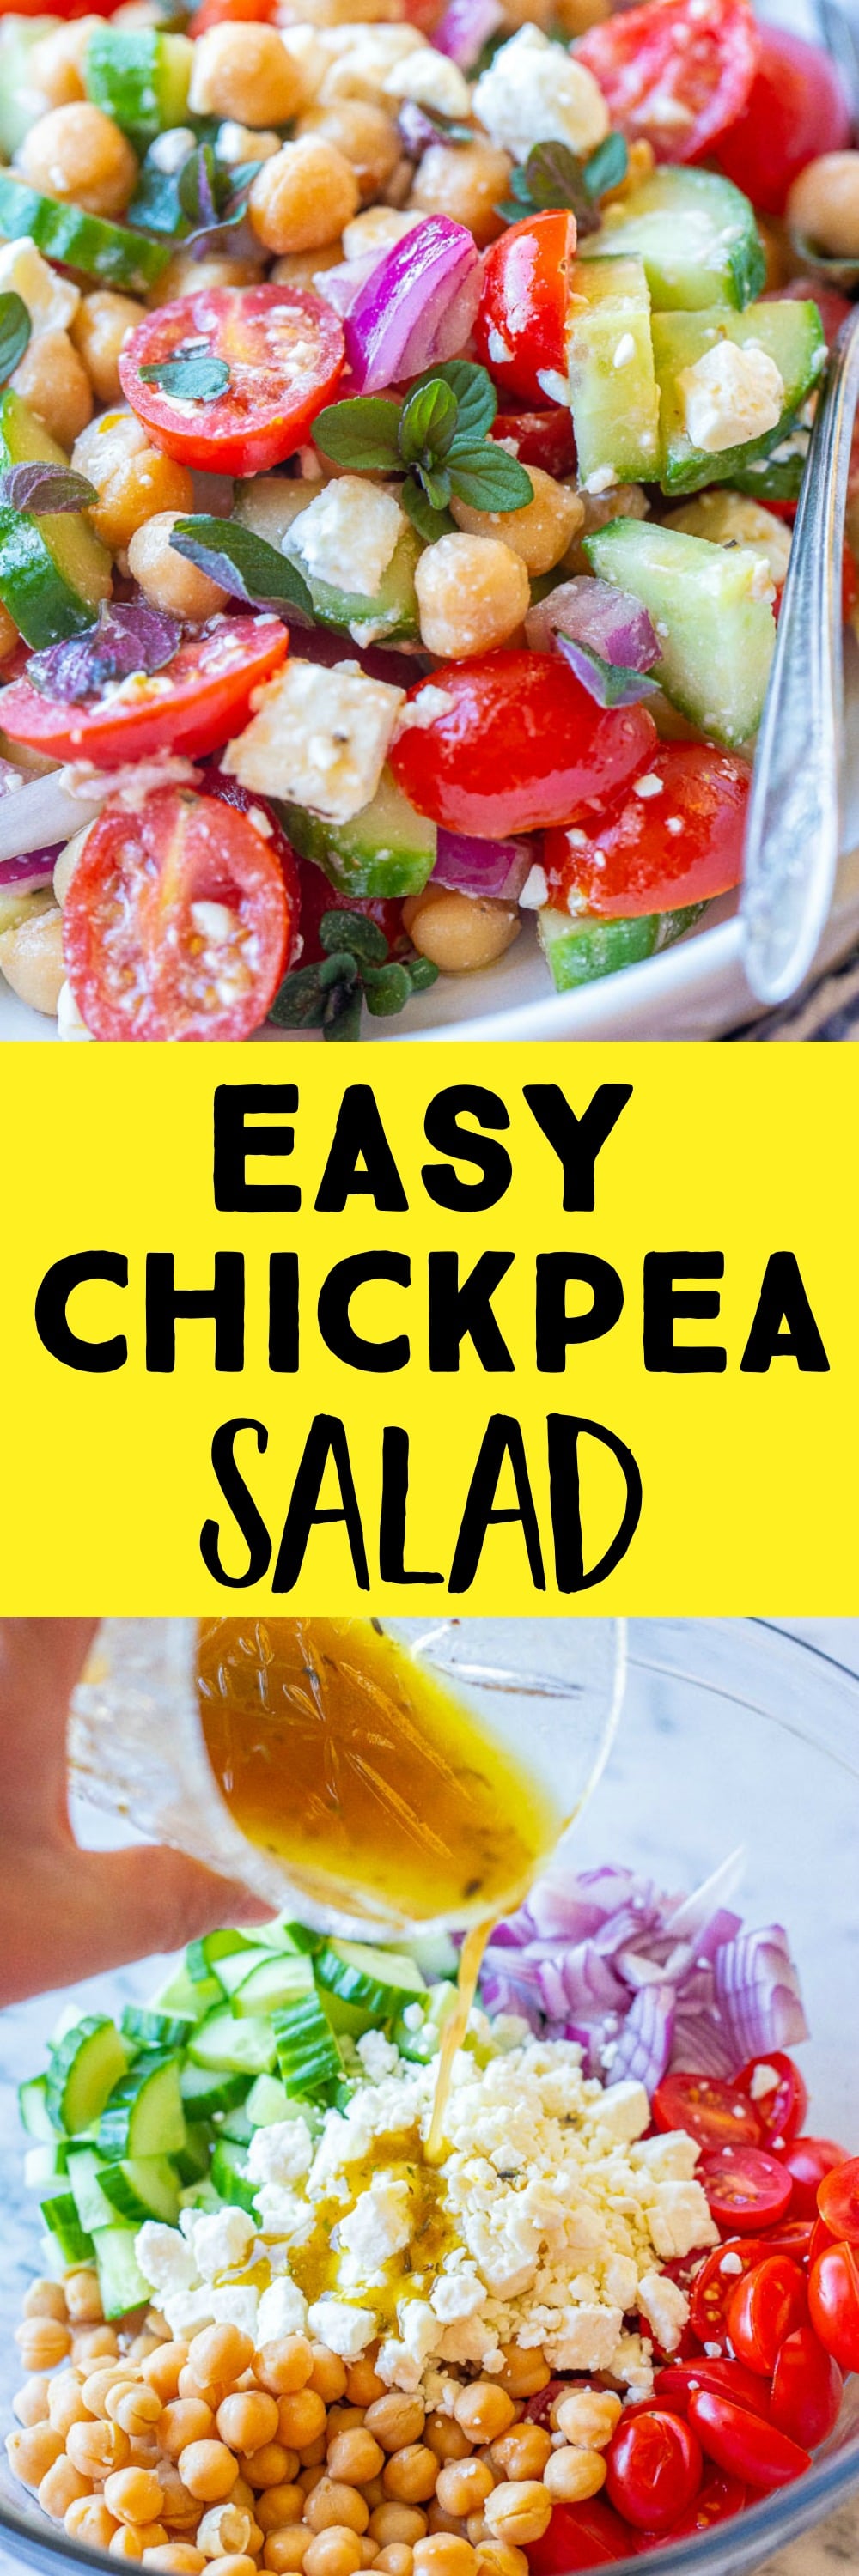 Easy Chickpea Salad - She Likes Food